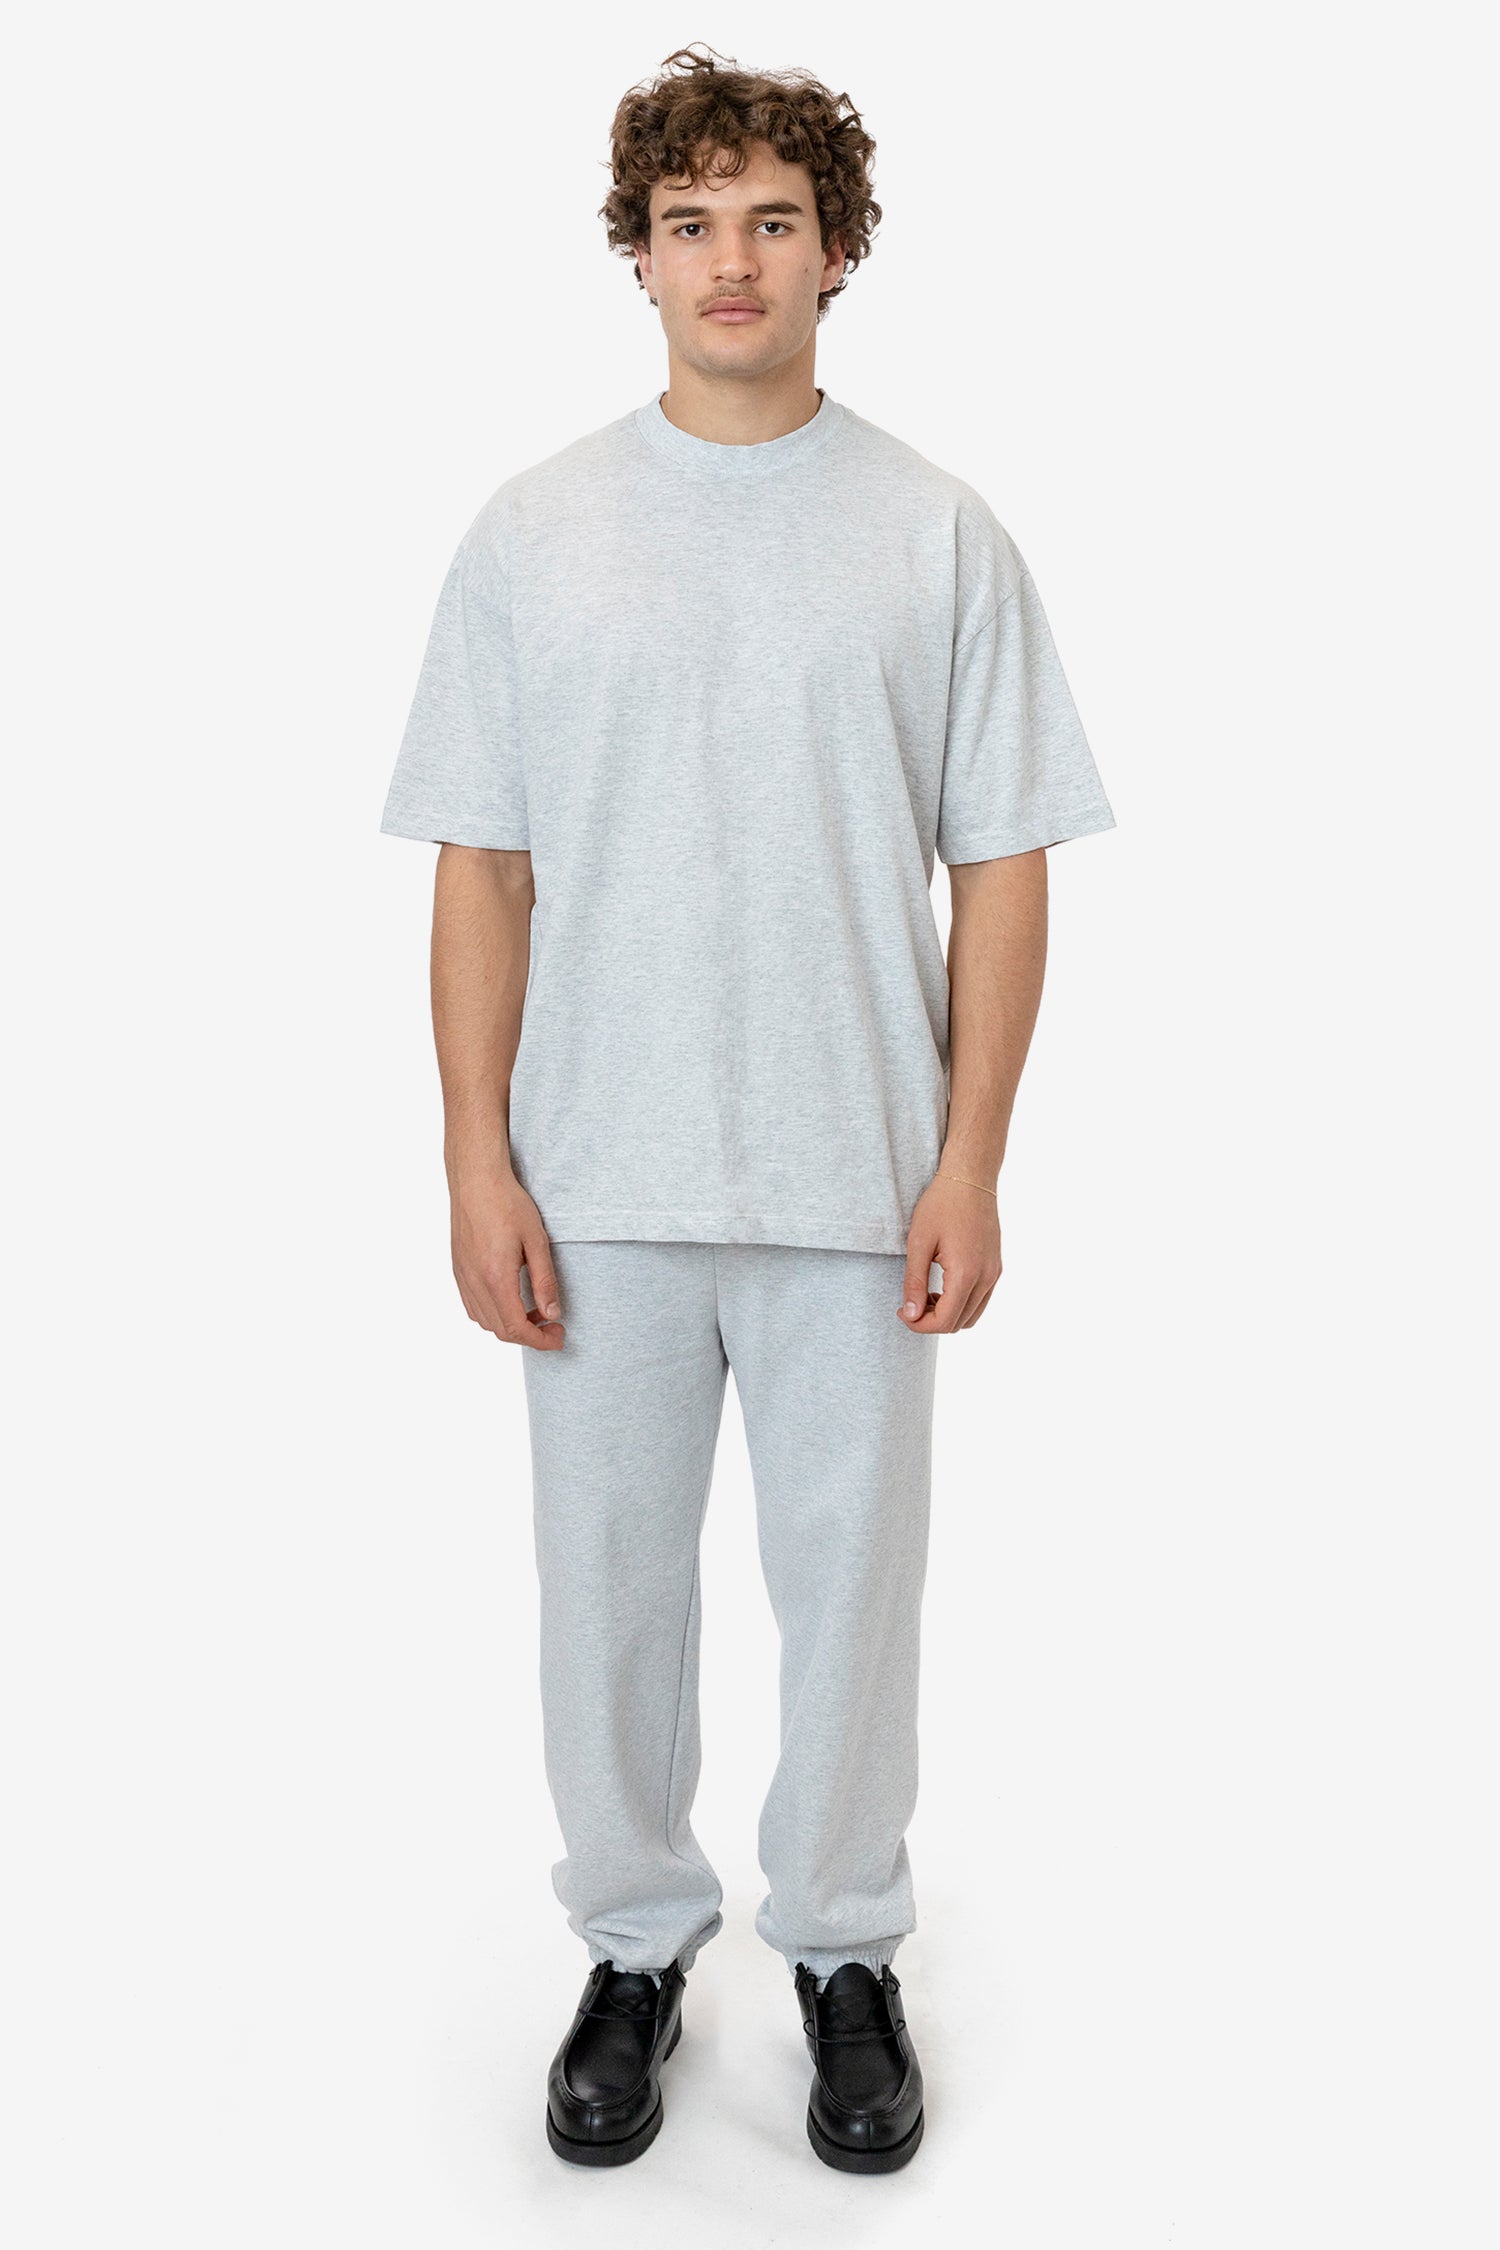 Los Angeles Apparel | Heavy Fleece Pants for Men in White, Size Medium